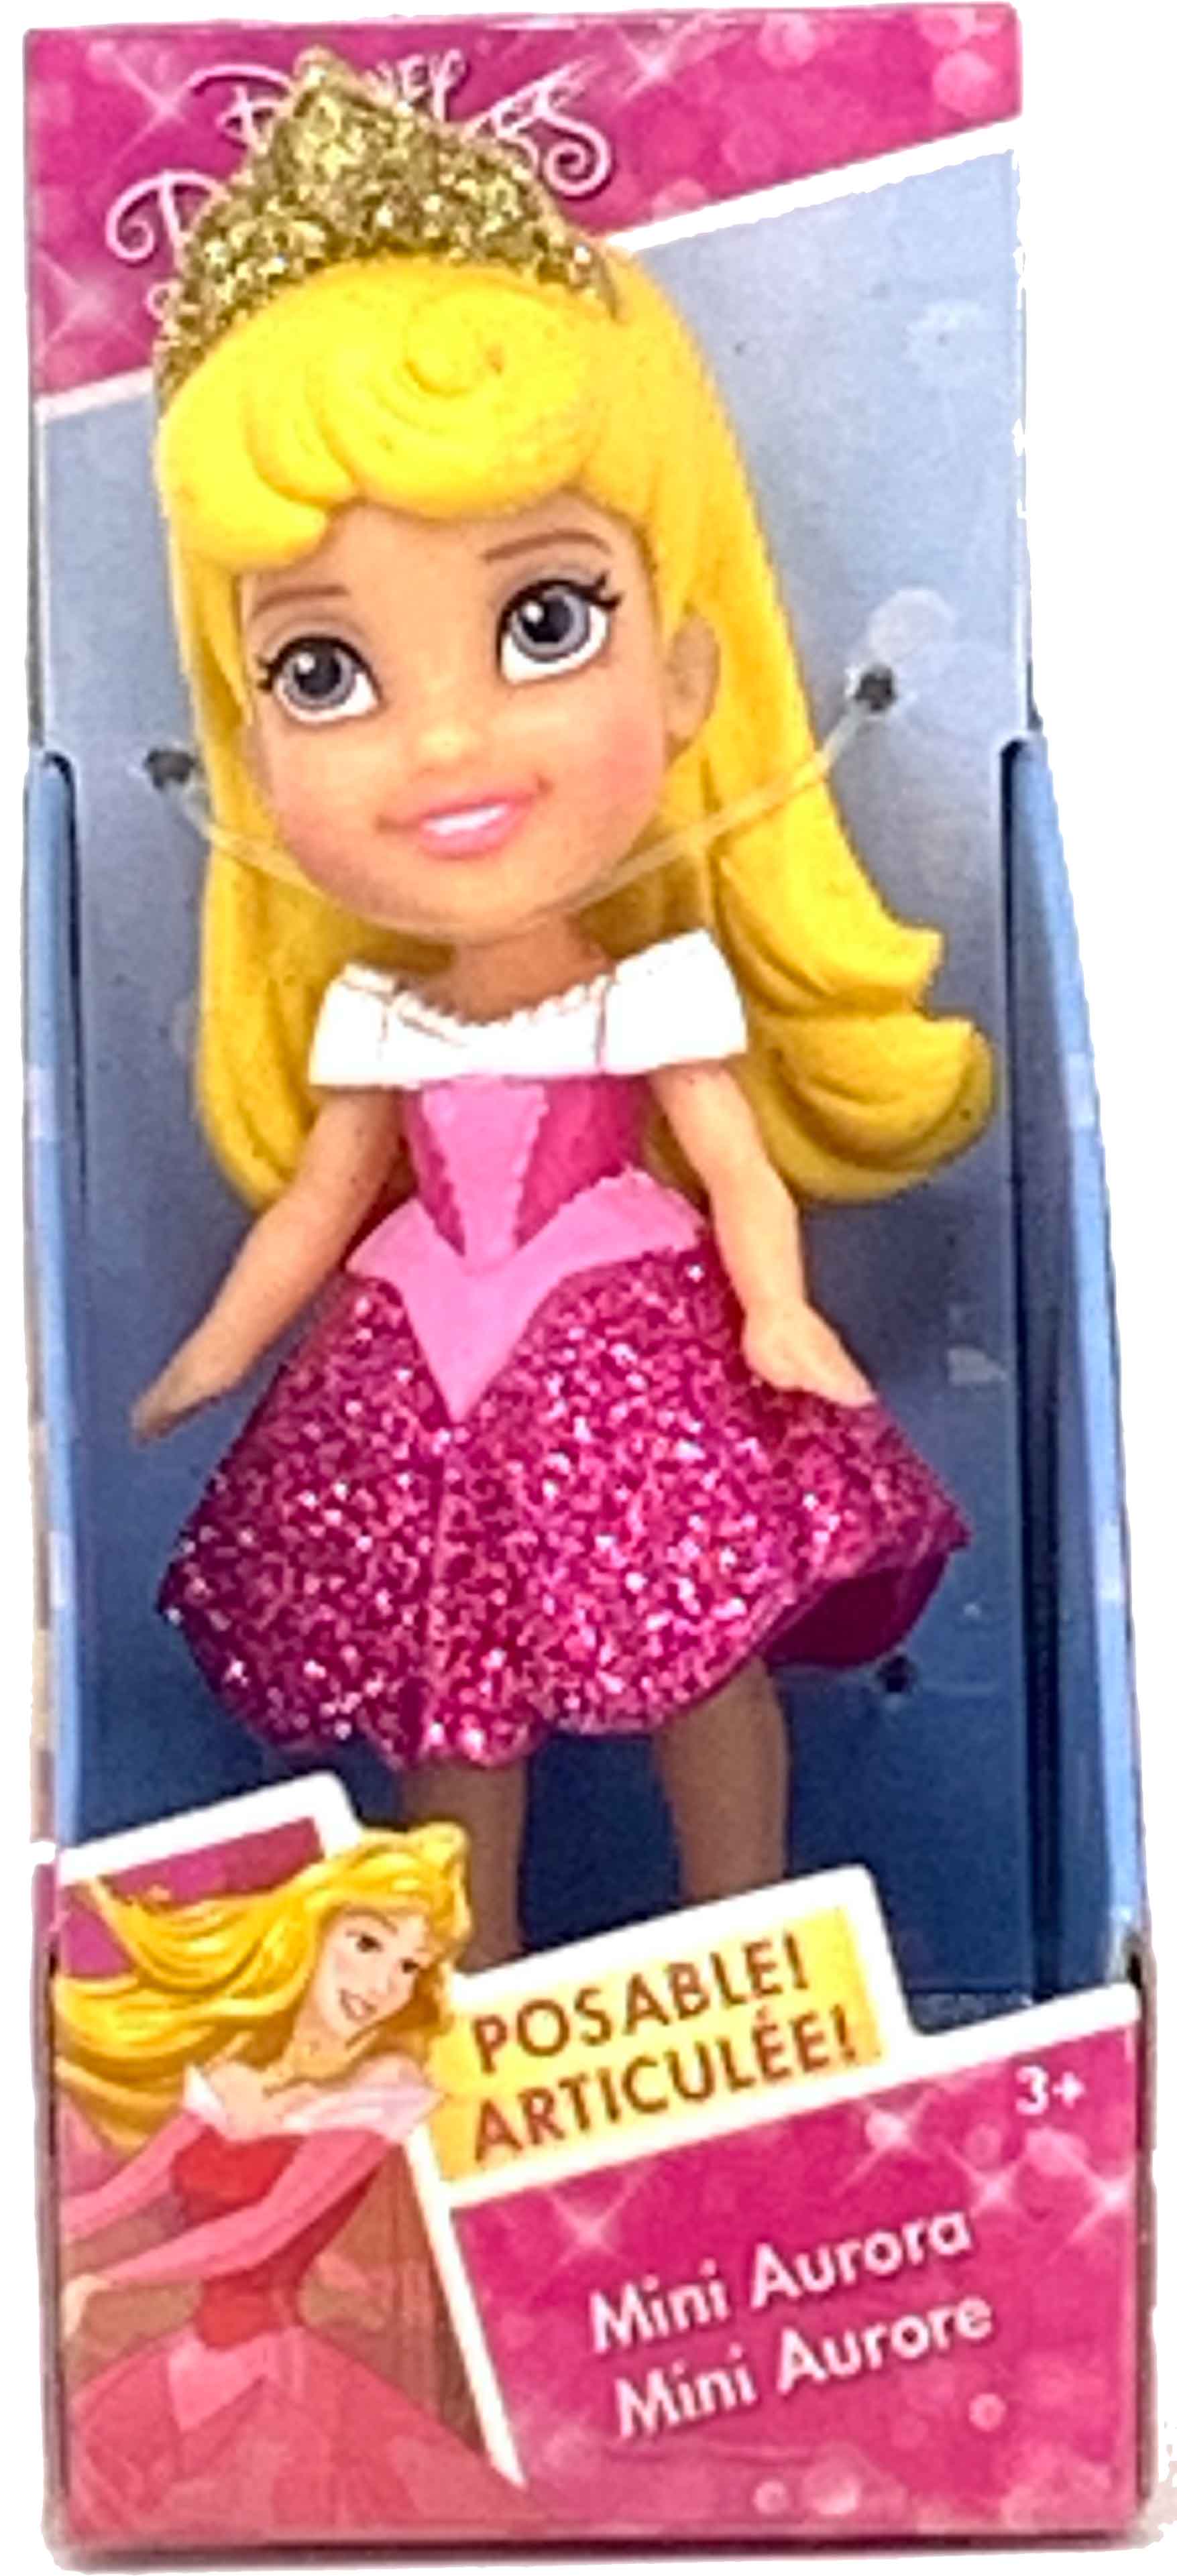 MASSIVE Disney Store Disney Princess Plush Dolls And Mixed Lot